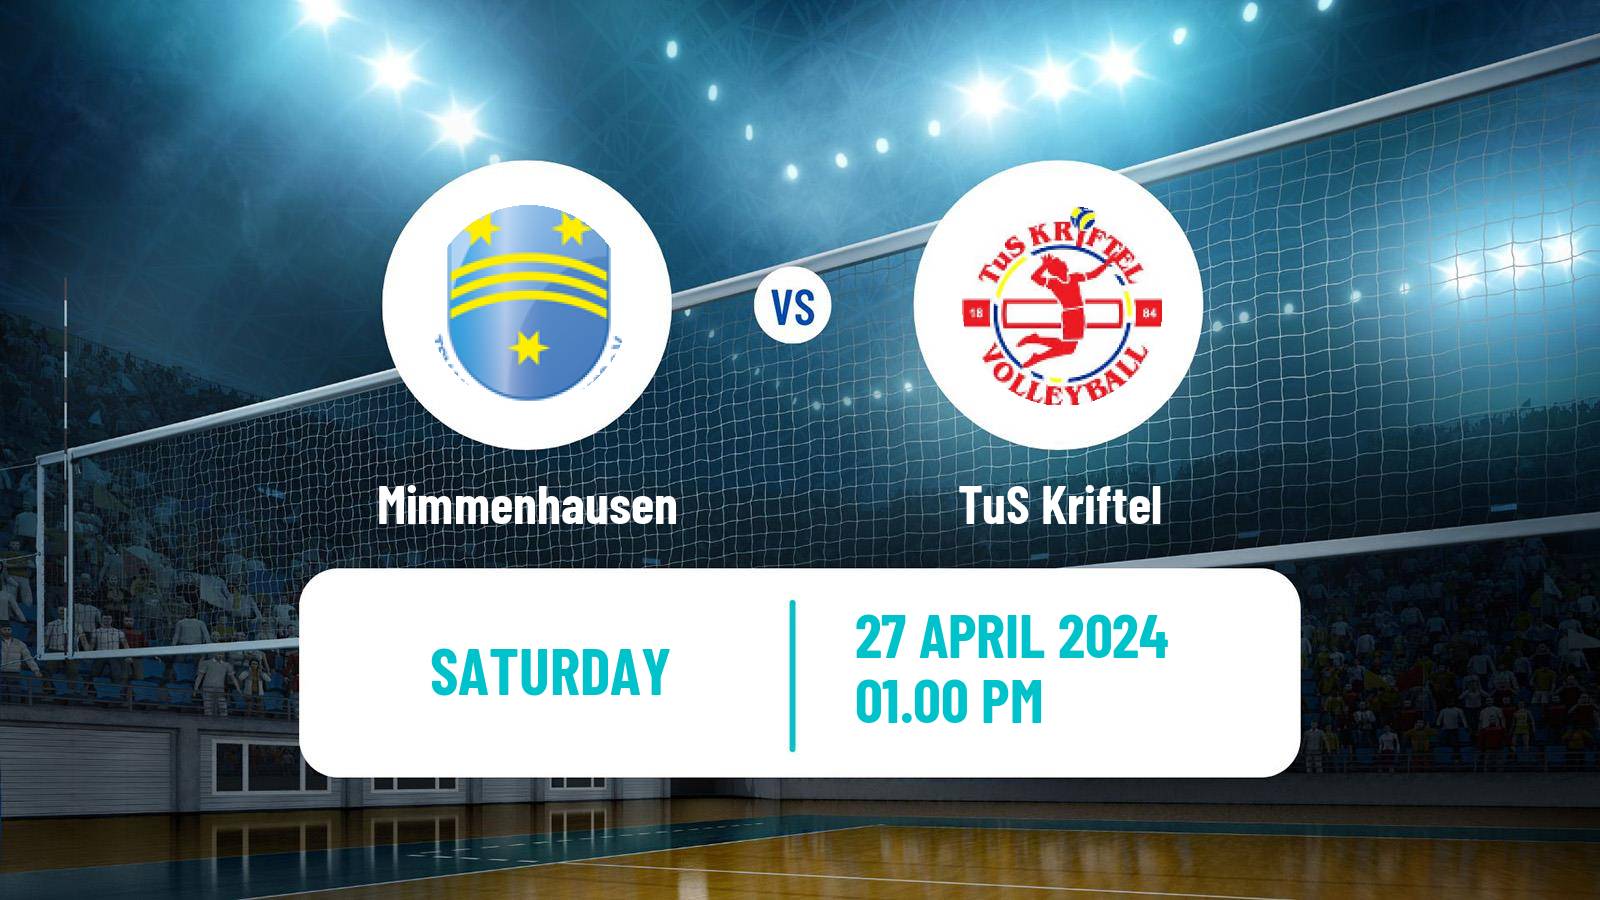 Volleyball German 2 Bundesliga South Volleyball Mimmenhausen - Kriftel